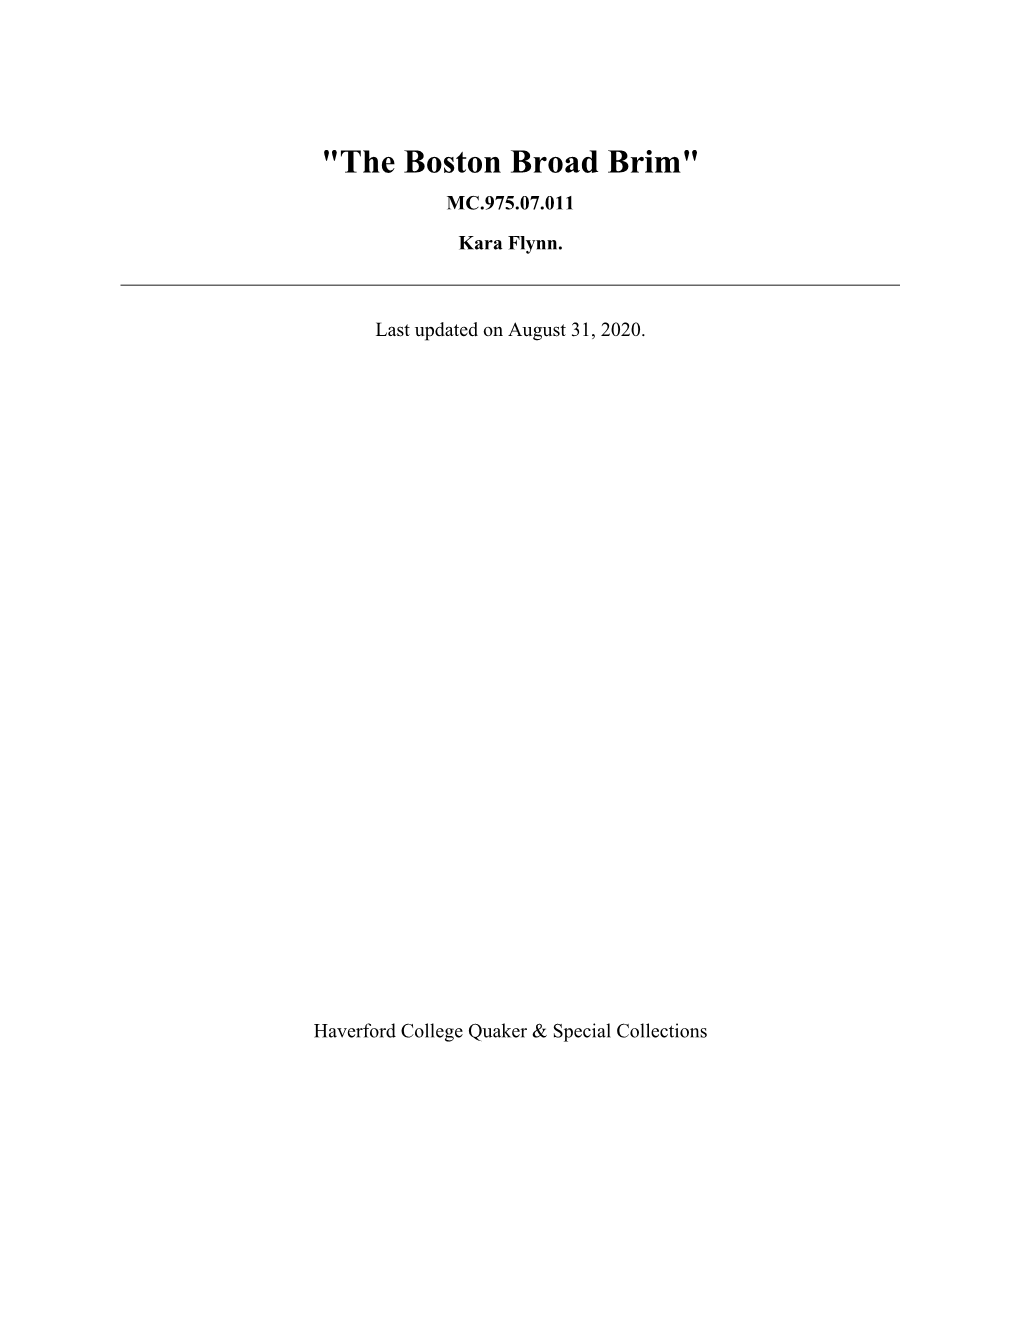 "The Boston Broad Brim" MC.975.07.011 Kara Flynn